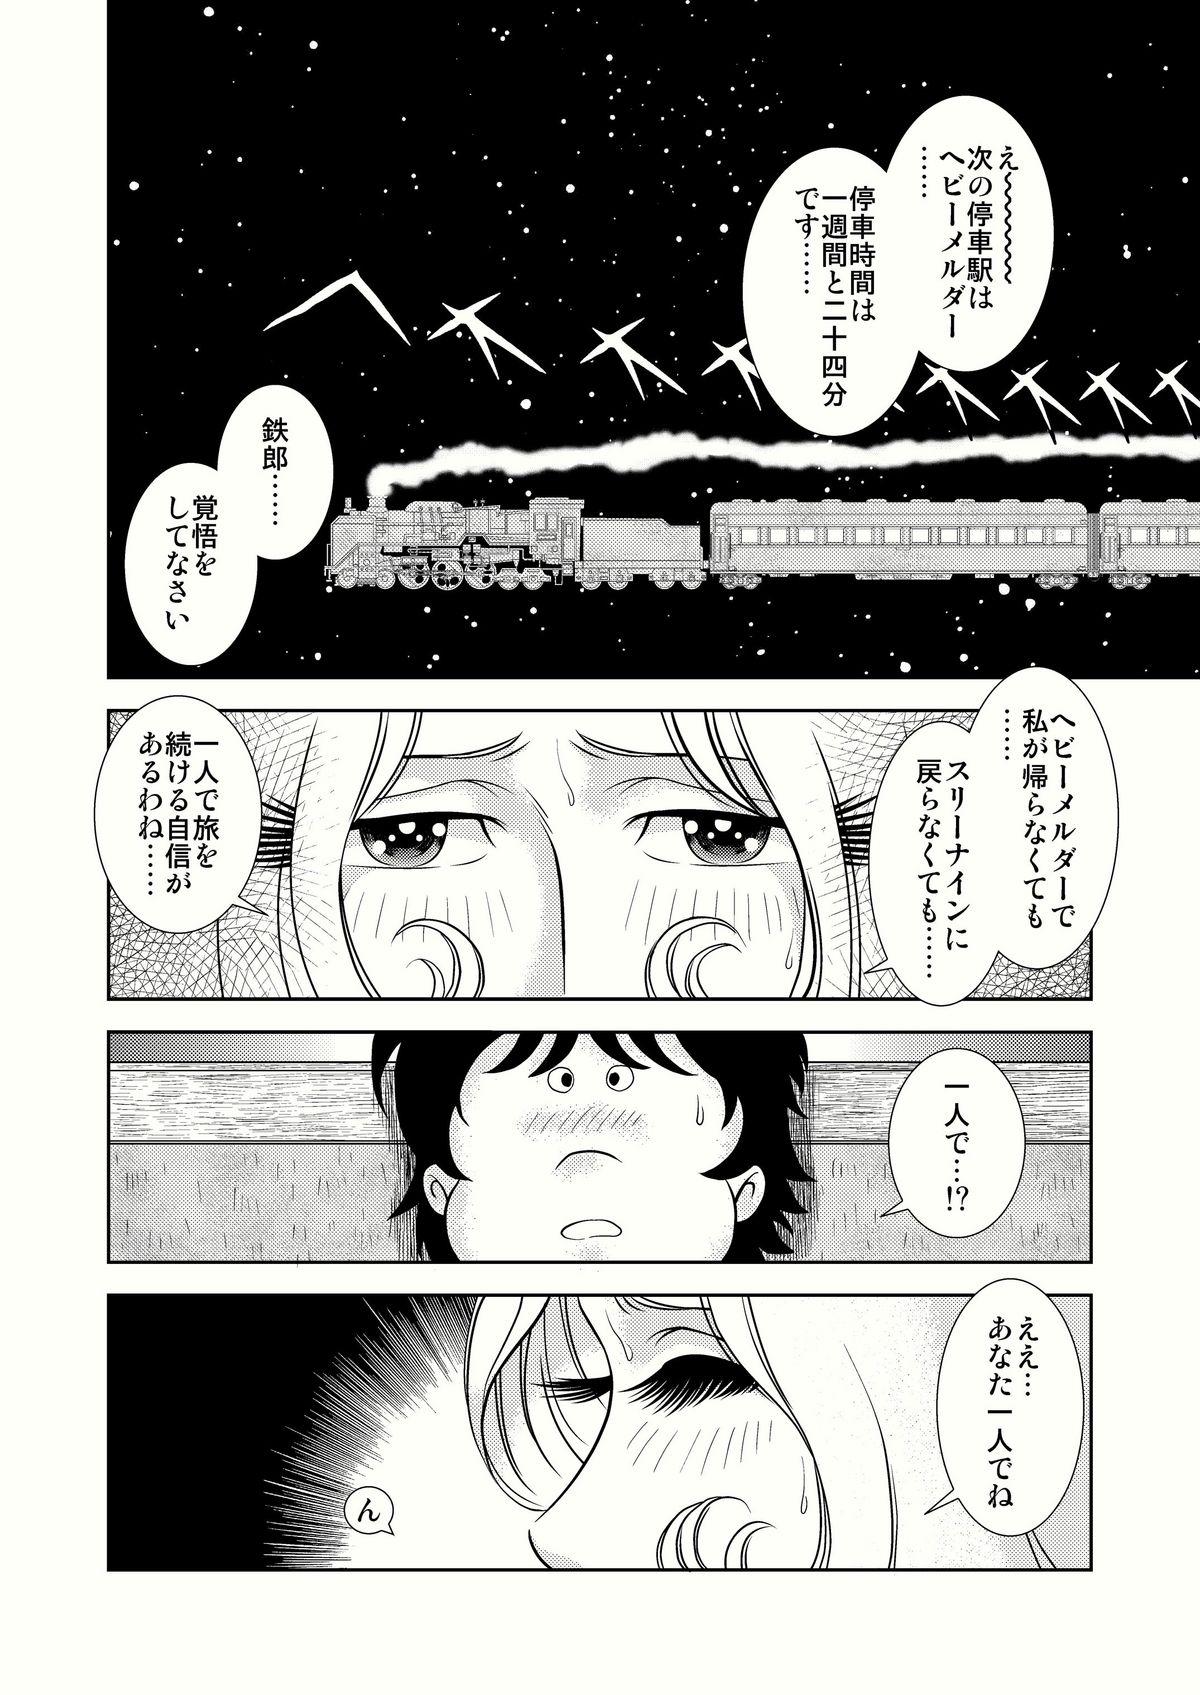 Submissive Maetel Story 4 - Galaxy express 999 Kashima - Page 2